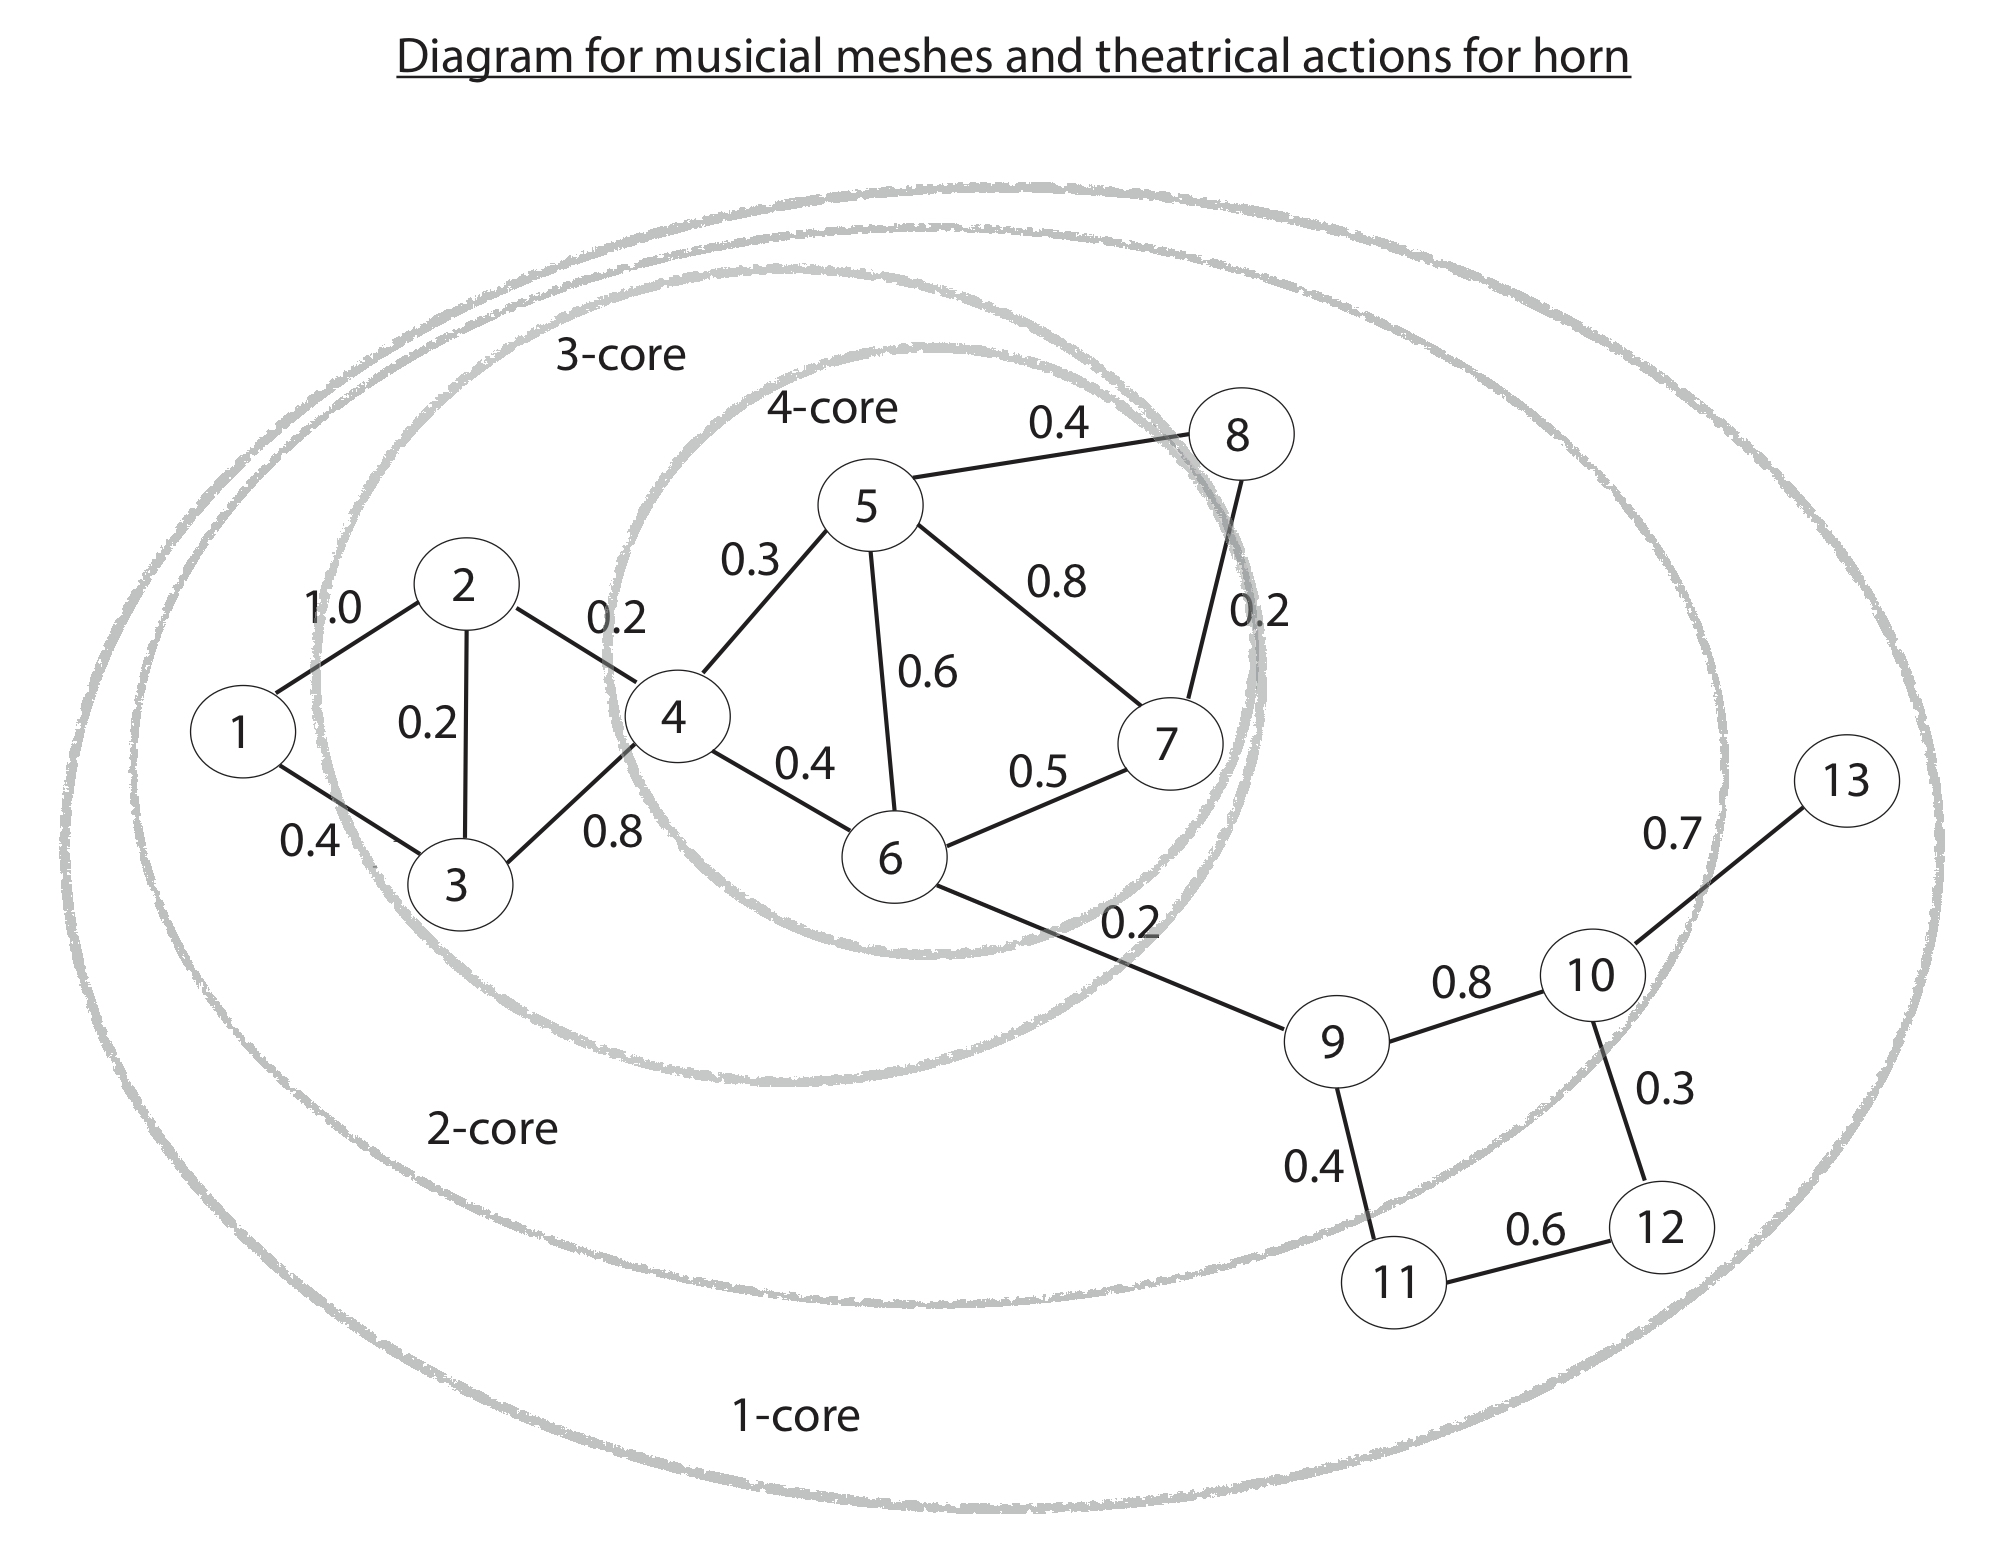 Diagrams for k-core Markov